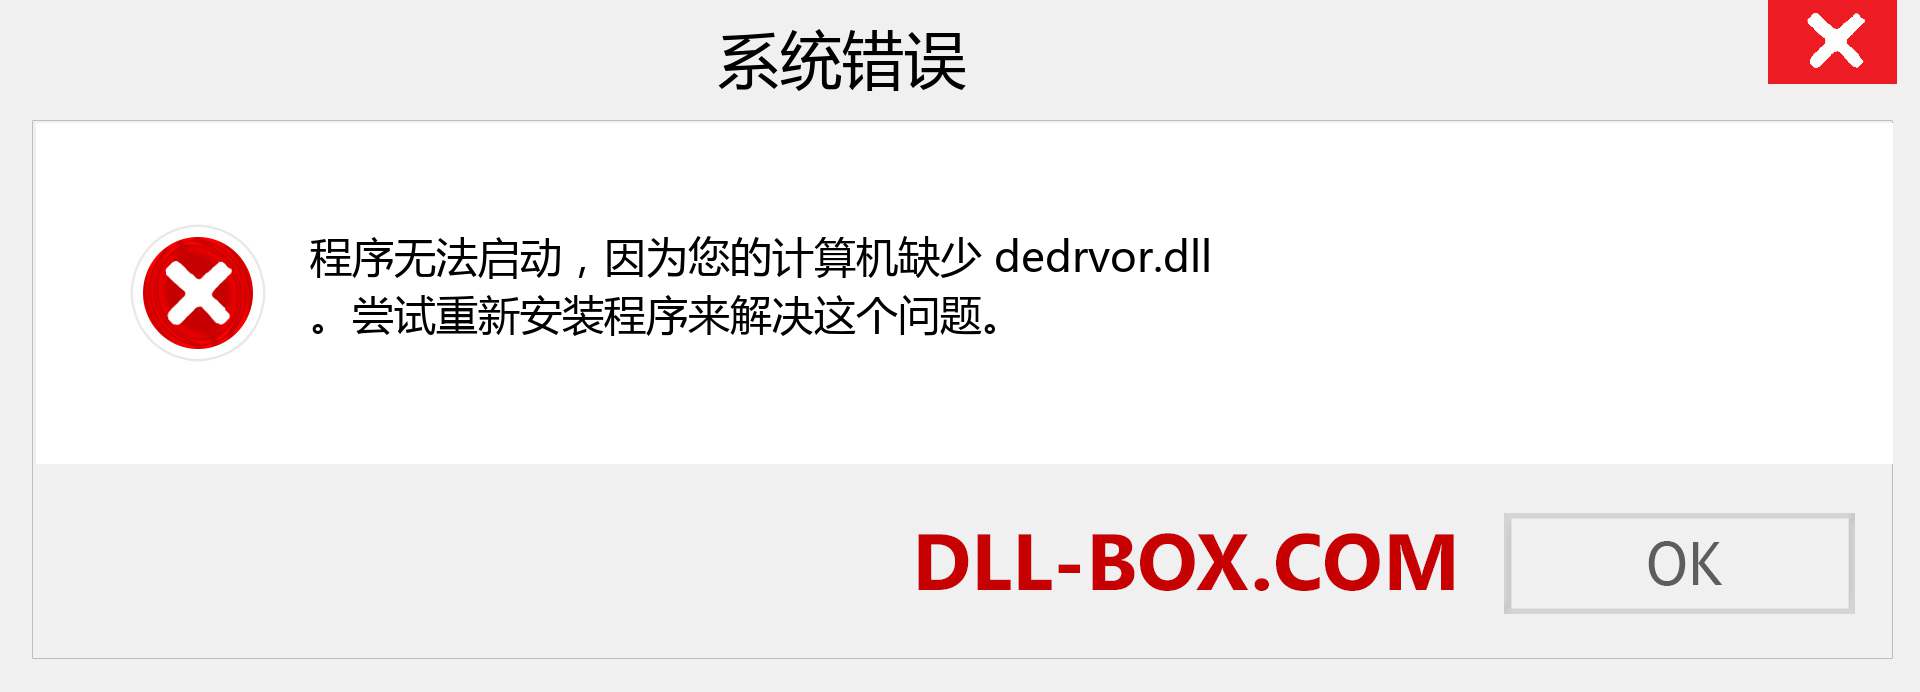 dedrvor.dll 文件丢失？。 适用于 Windows 7、8、10 的下载 - 修复 Windows、照片、图像上的 dedrvor dll 丢失错误